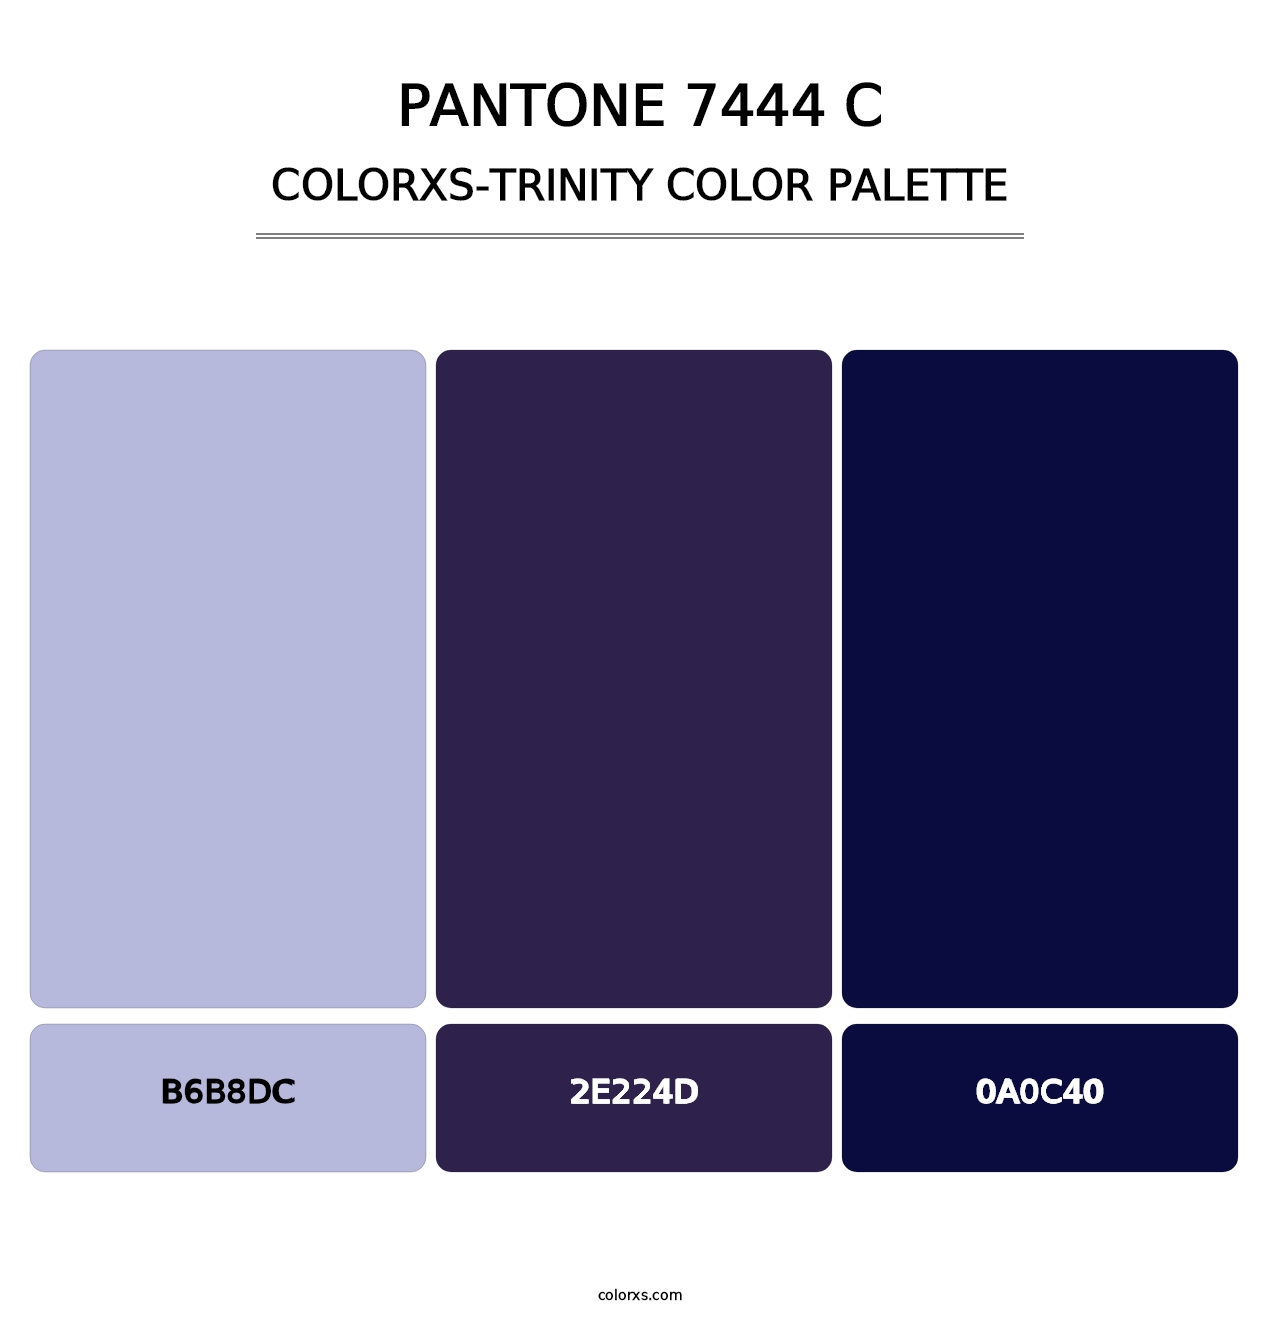 PANTONE 7444 C - Colorxs Trinity Palette